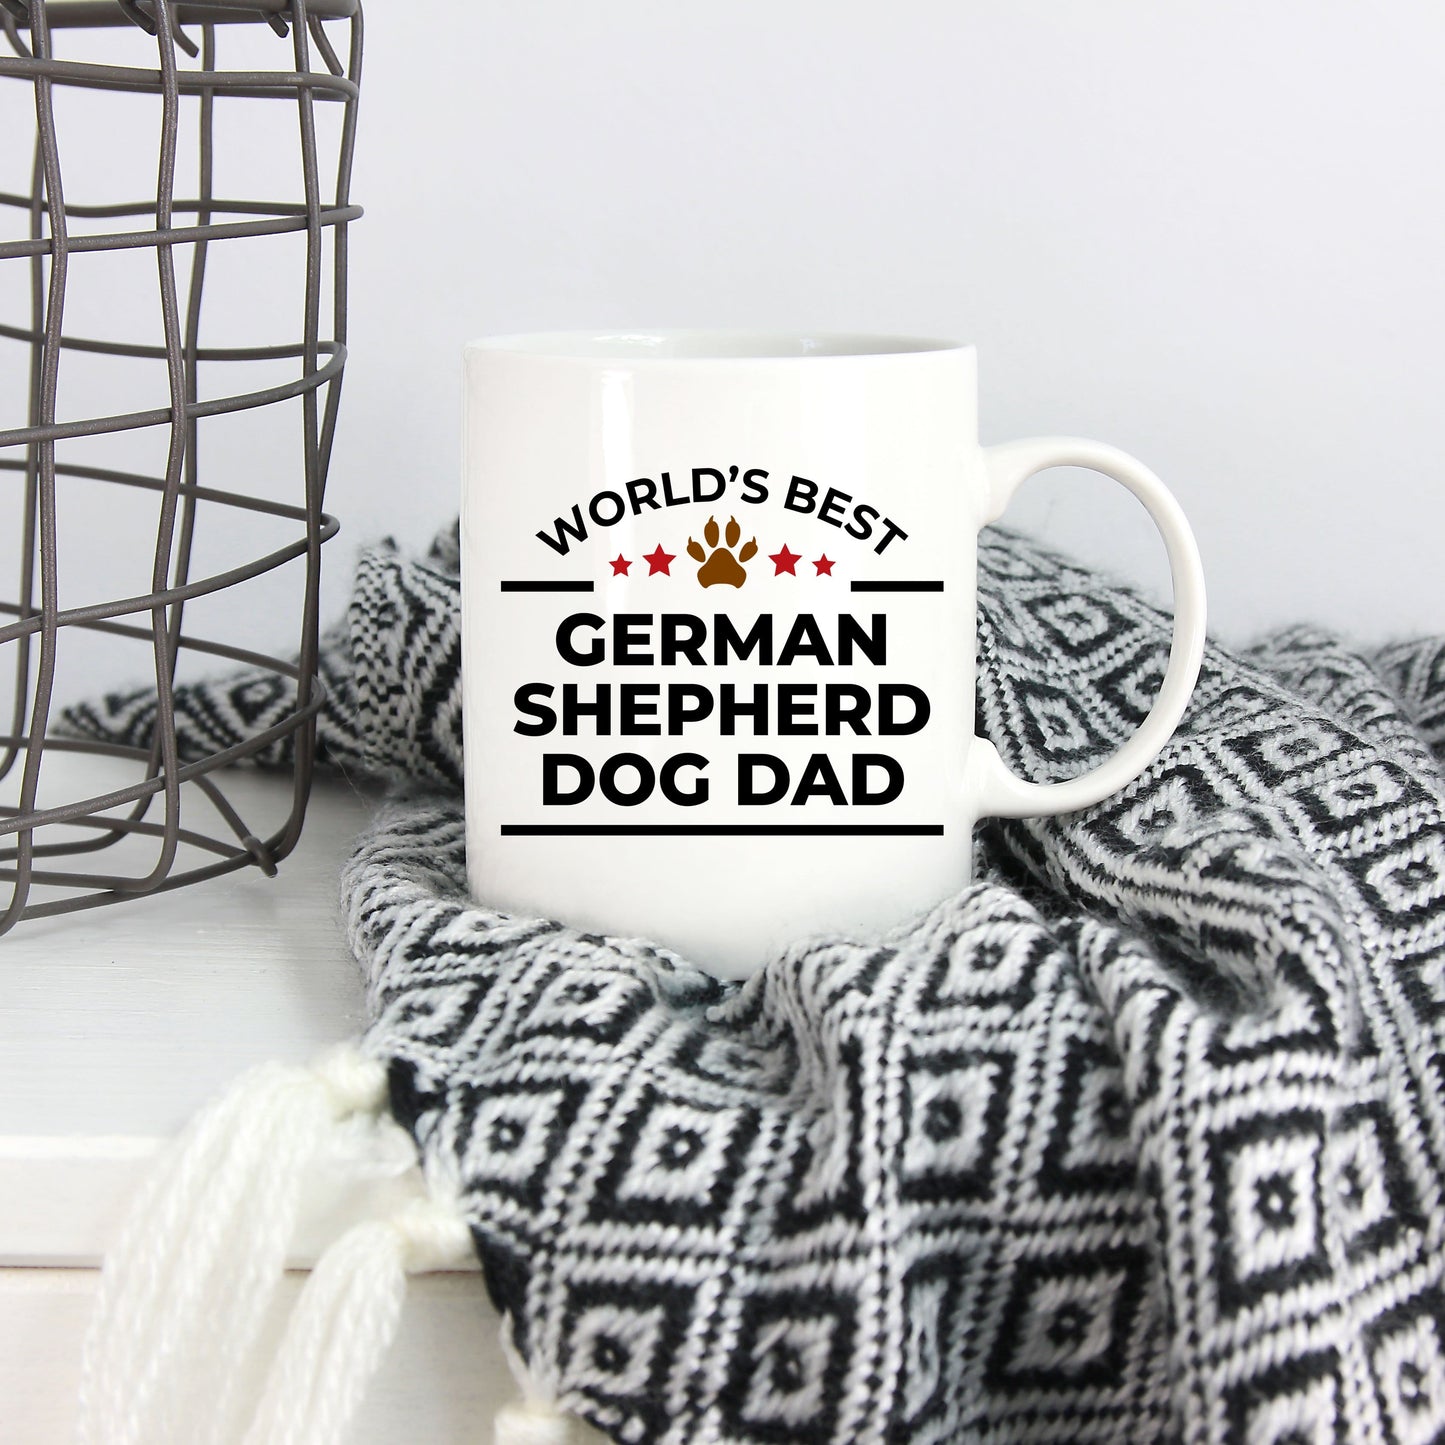 World's Best German Shepherd Dog Dad White Ceramic Mug